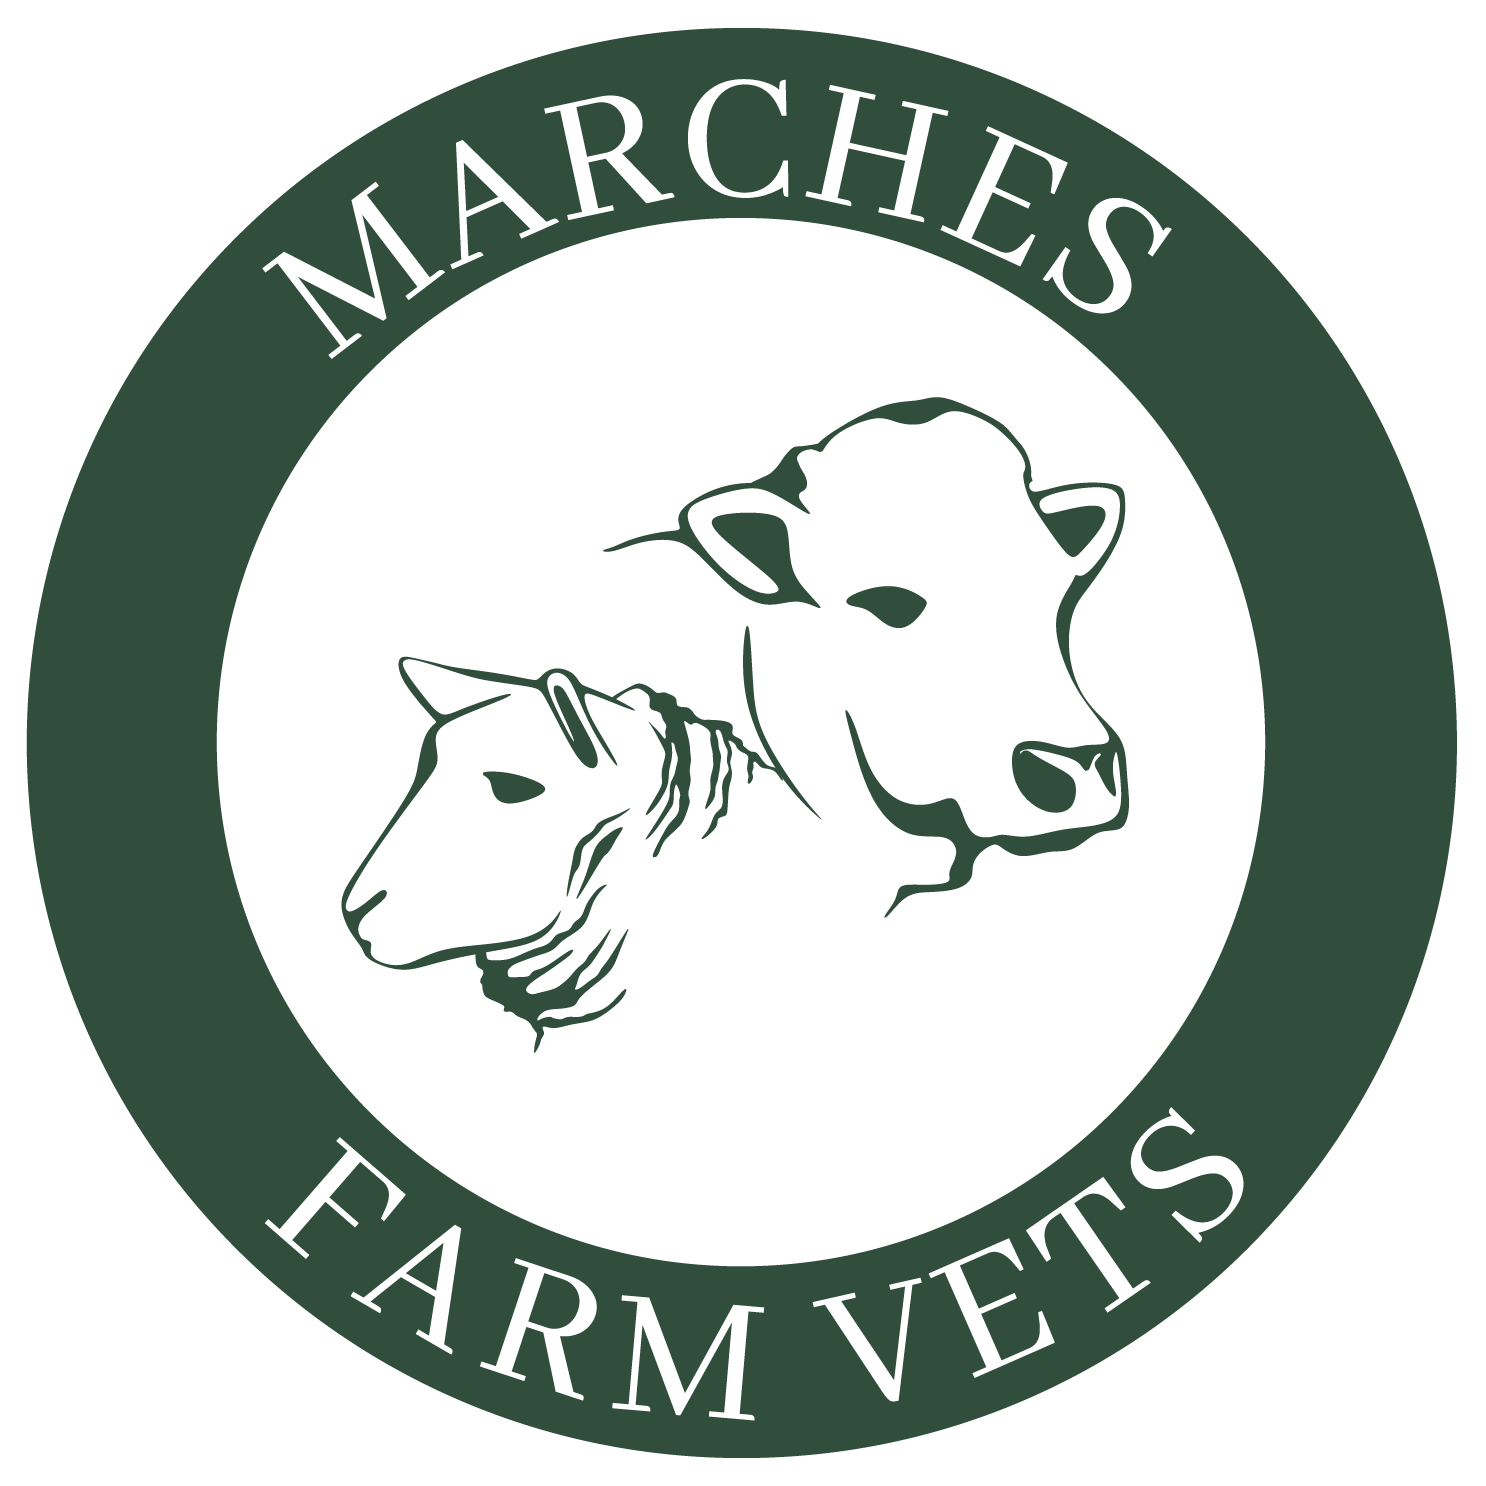 Marches Farm Vets